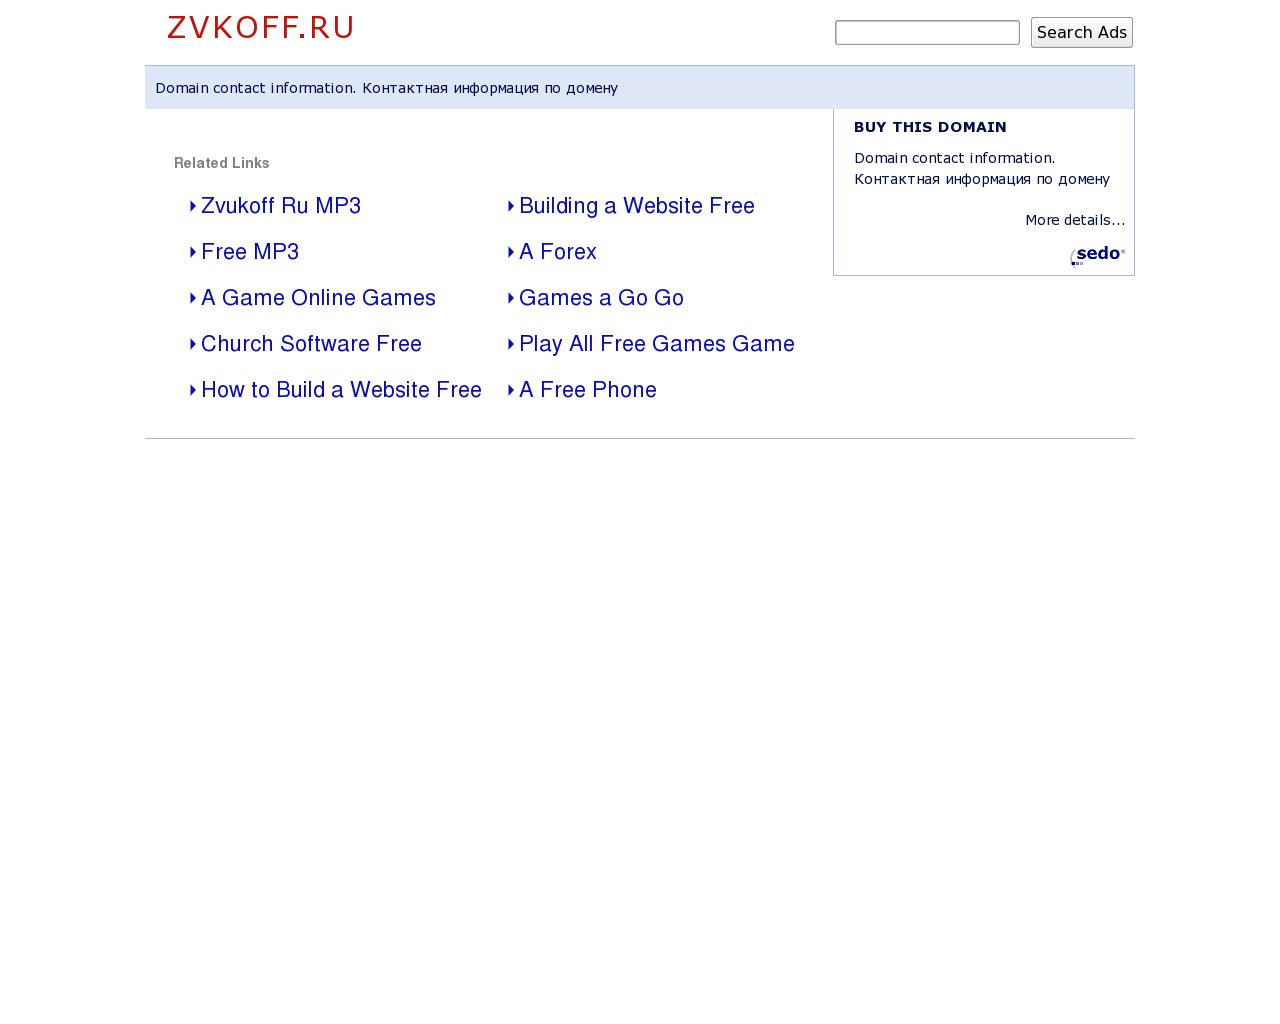 Изображение сайта zvkoff.ru в разрешении 1280x1024